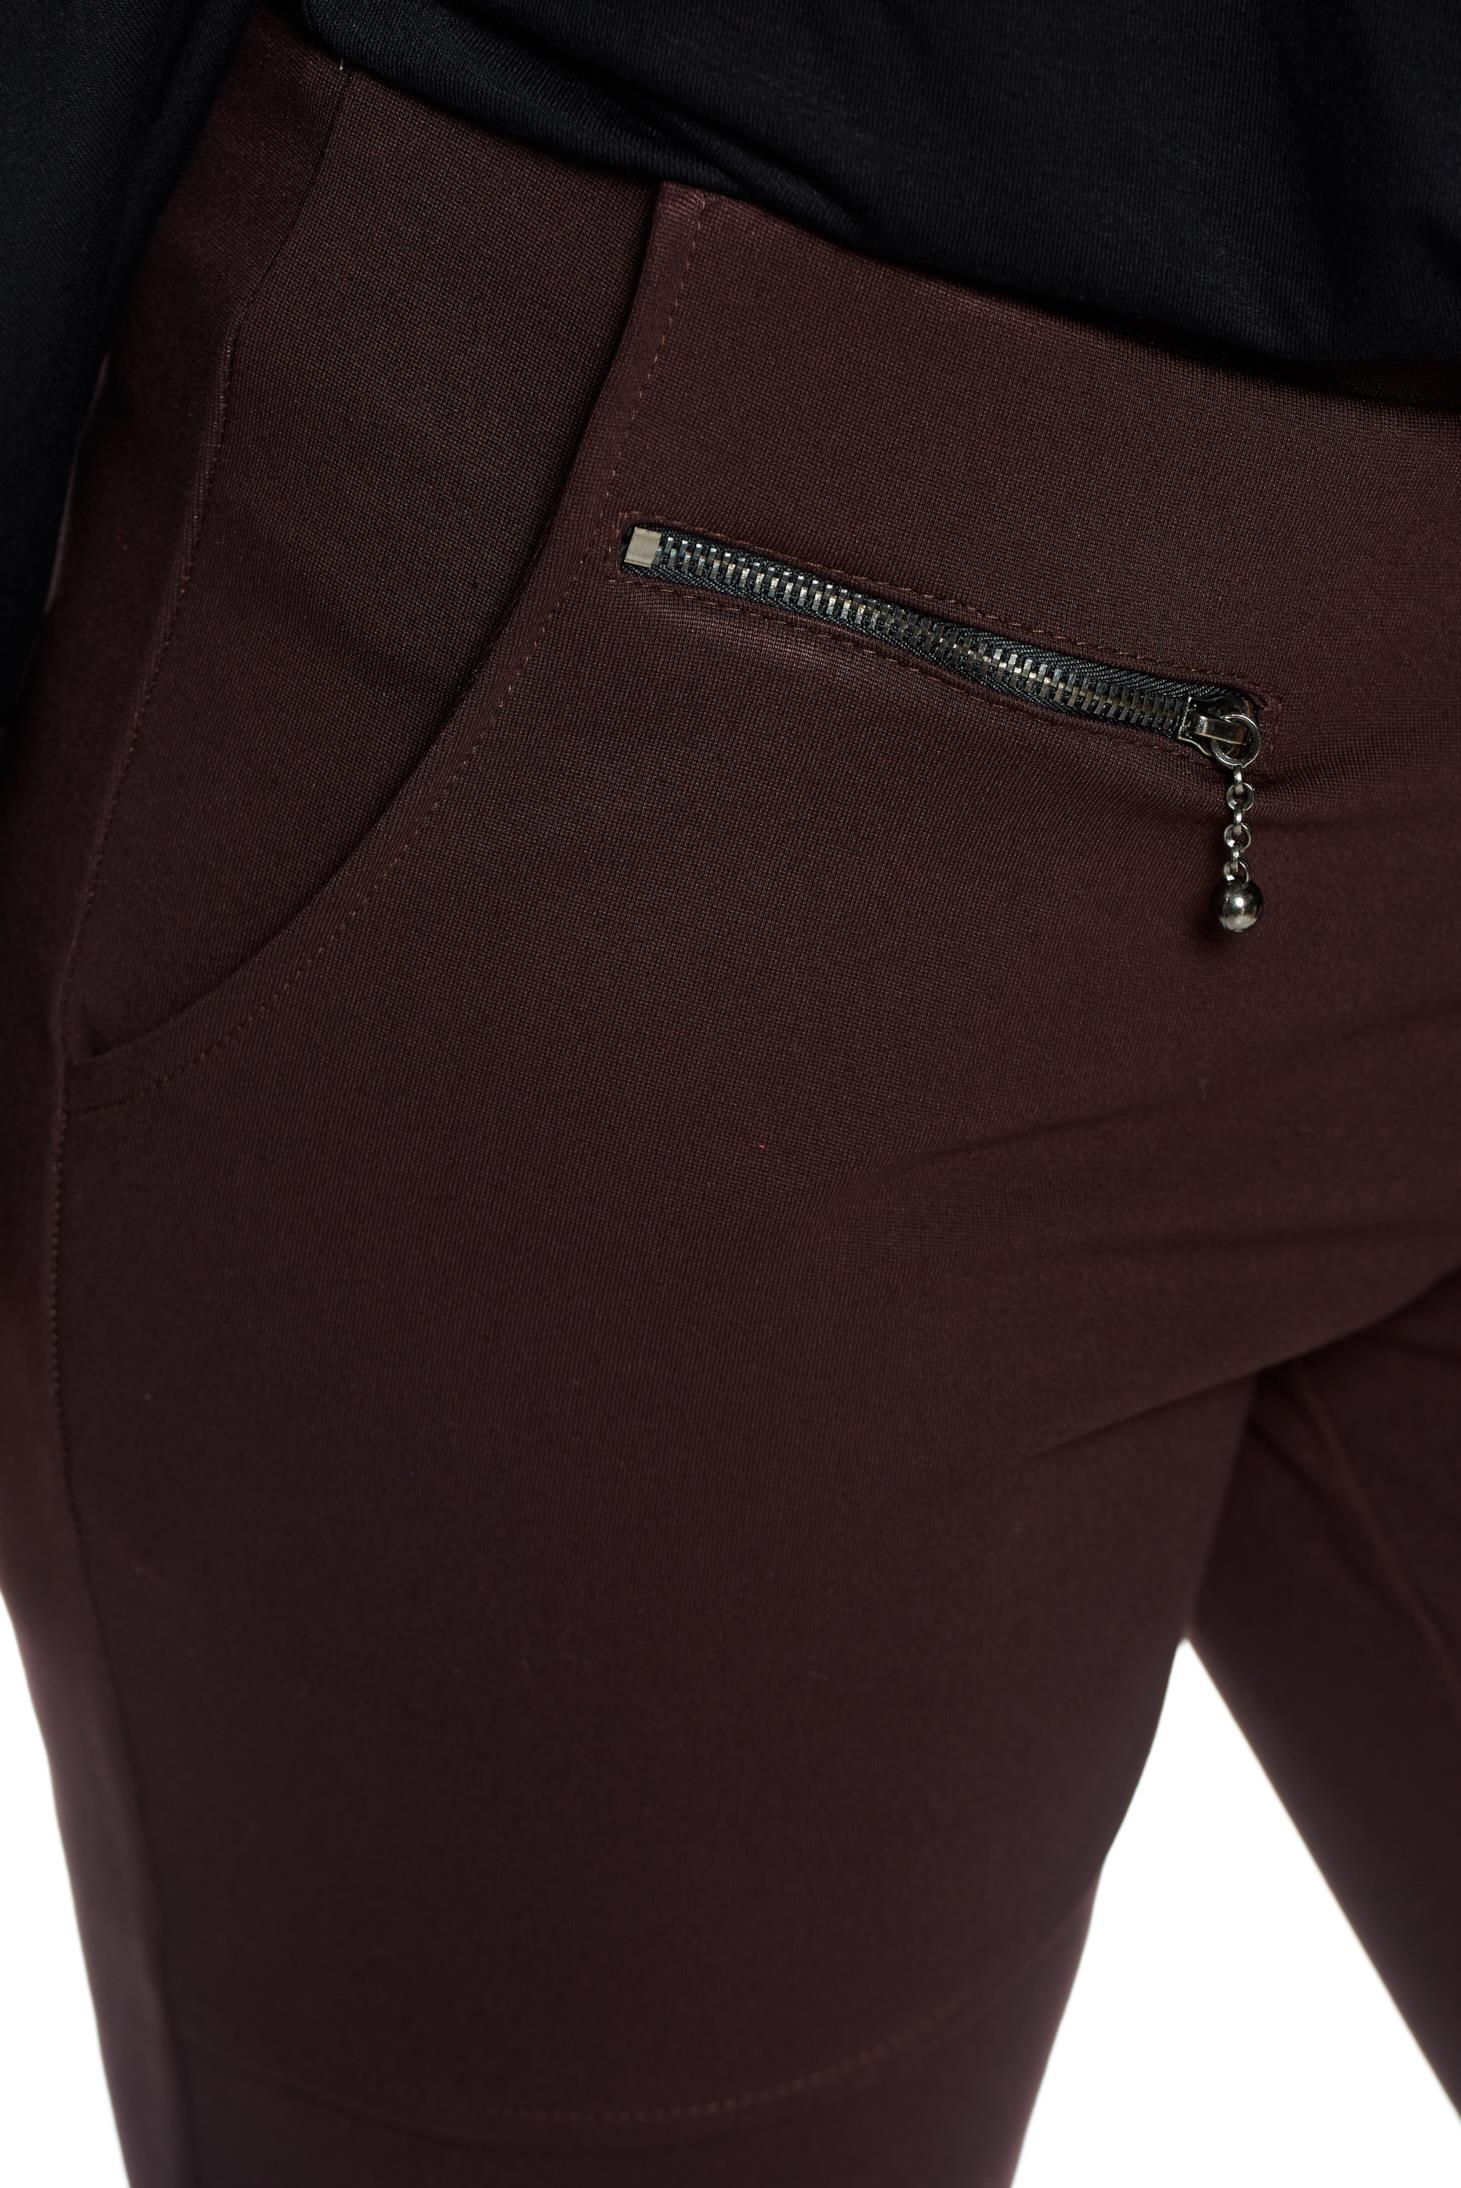 Pantaloni PrettyGirl maro inchis casual conici cu talie medie bumbac usor elastic 4 - StarShinerS.ro